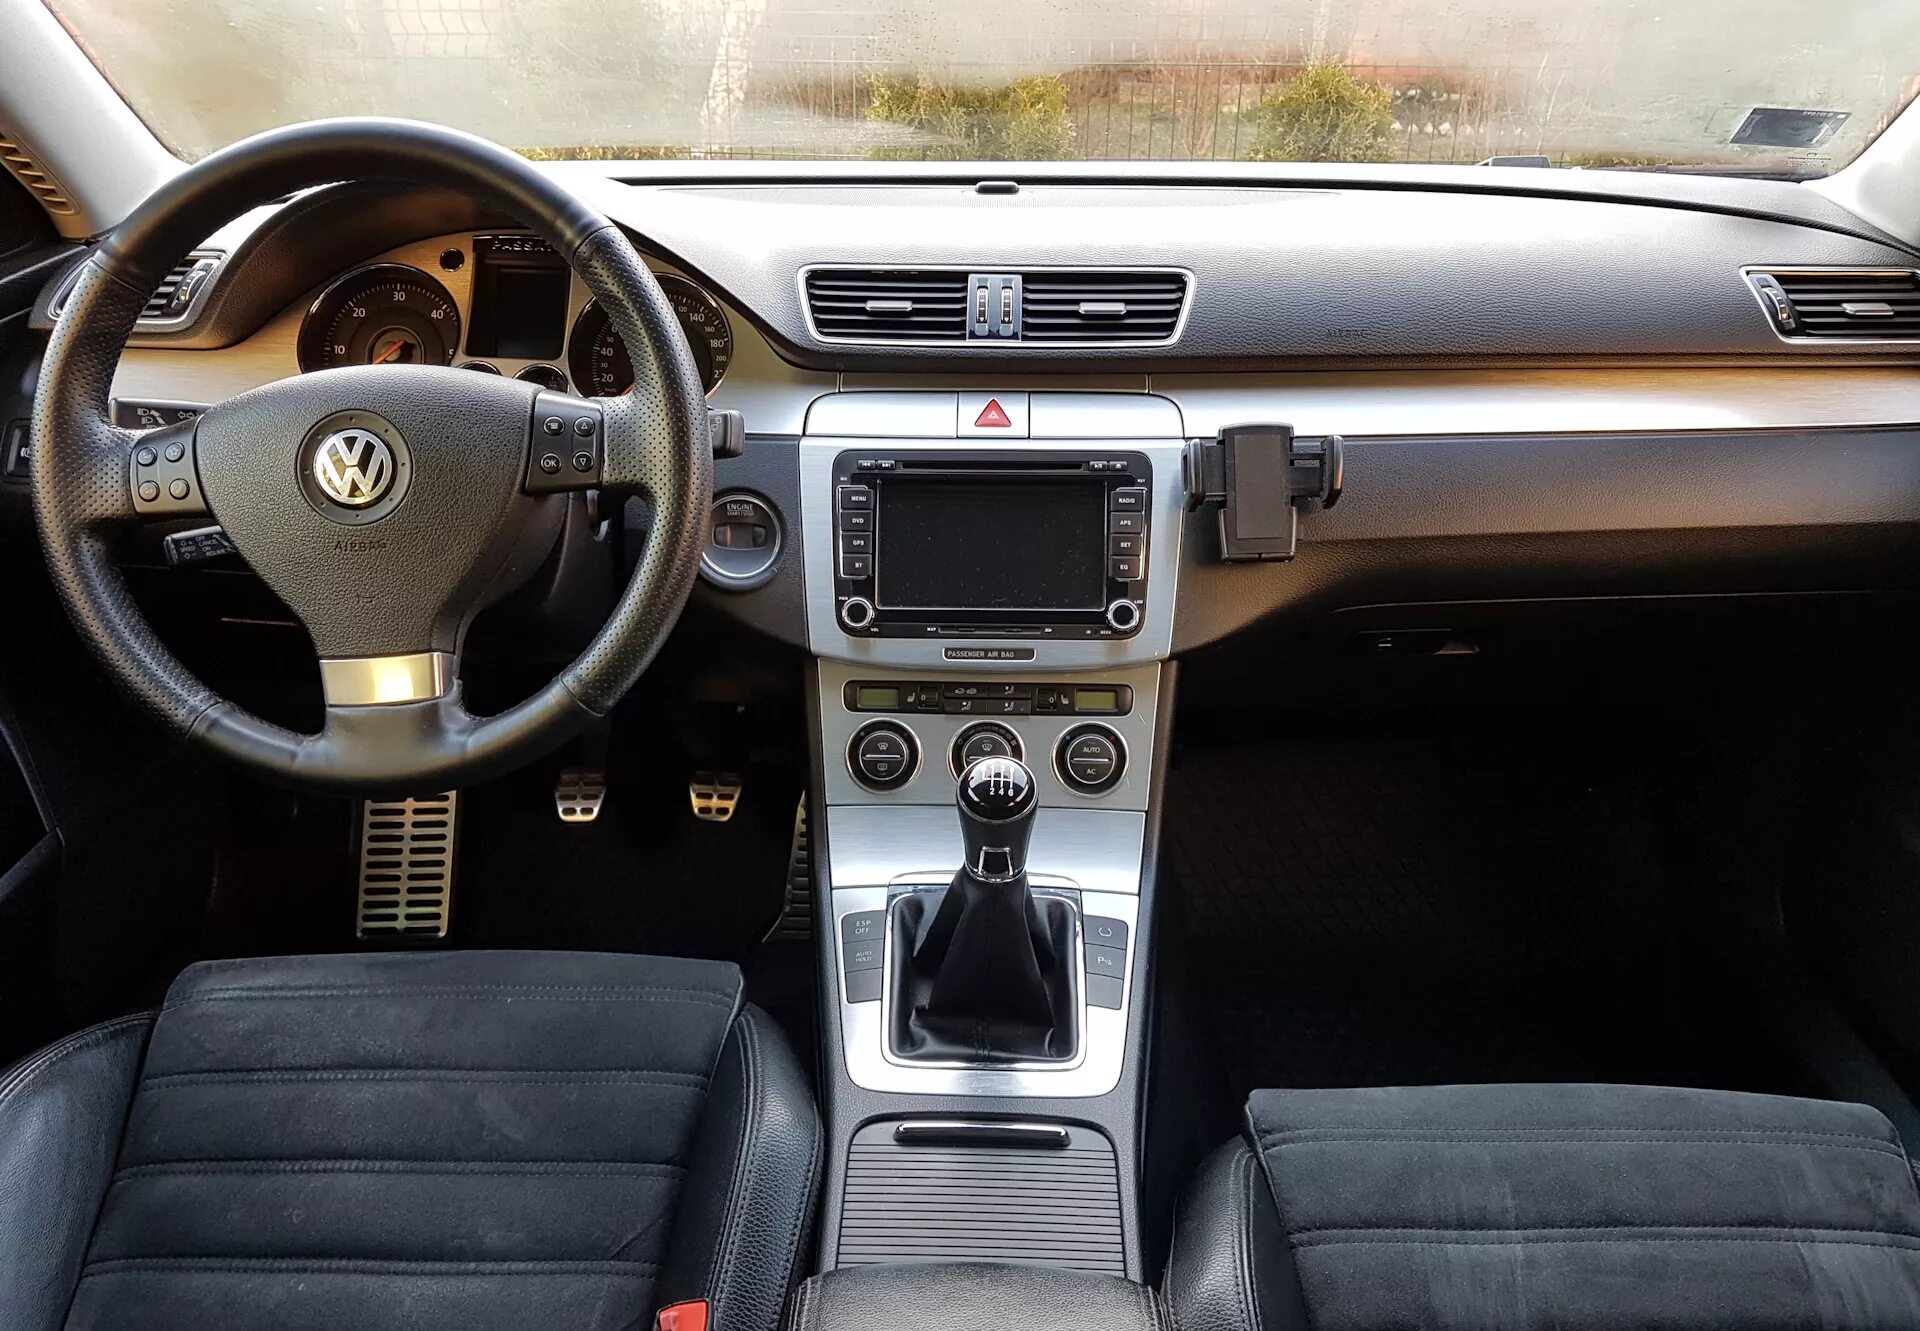 VW Passat b6 салон. Фольксваген Пассат б6 2008 салон. WV Passat b6 салон. Volkswagen Passat b6 Interior.